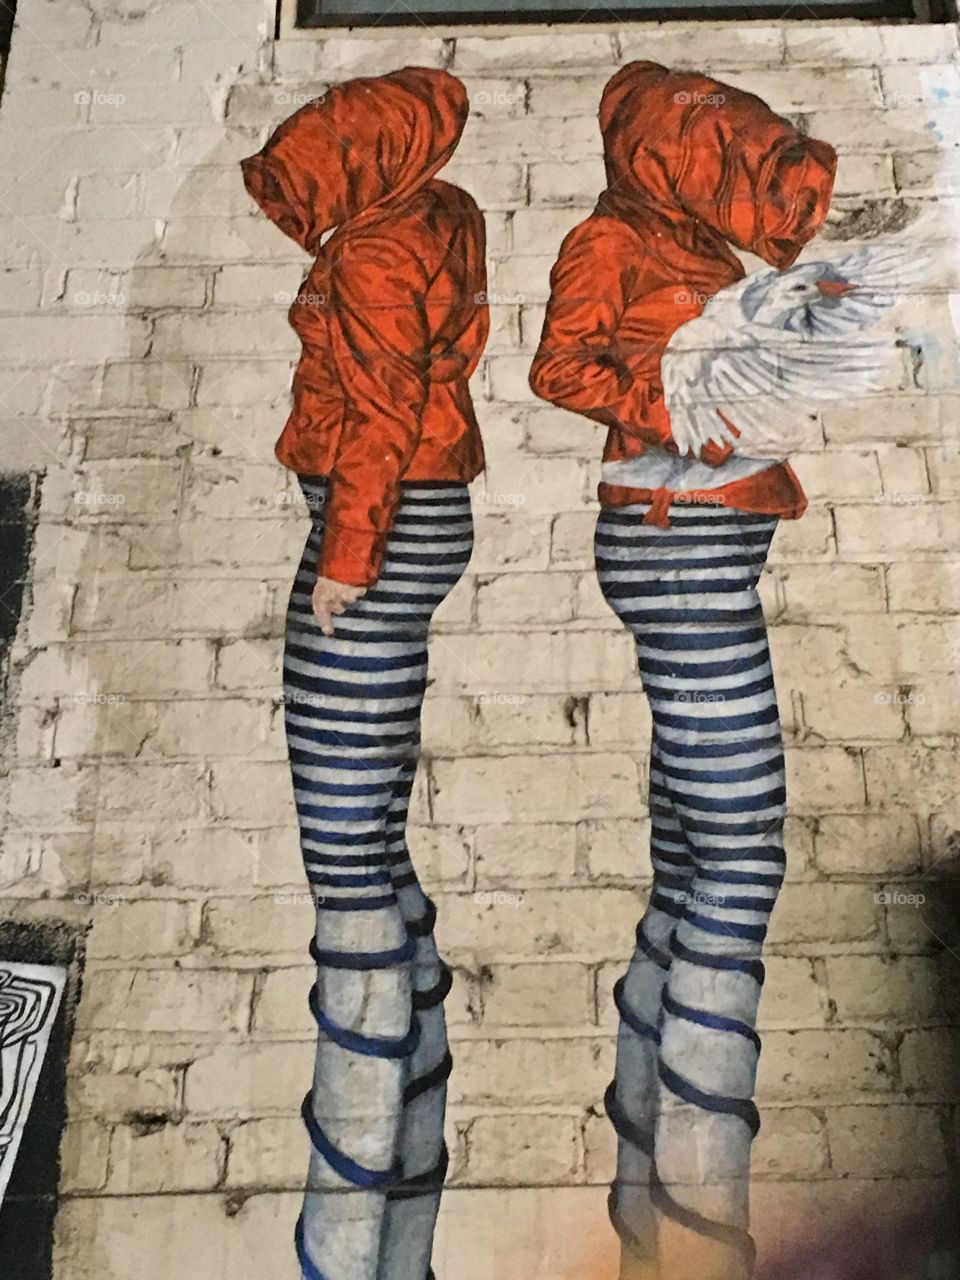 Graffiti of Melbourne 